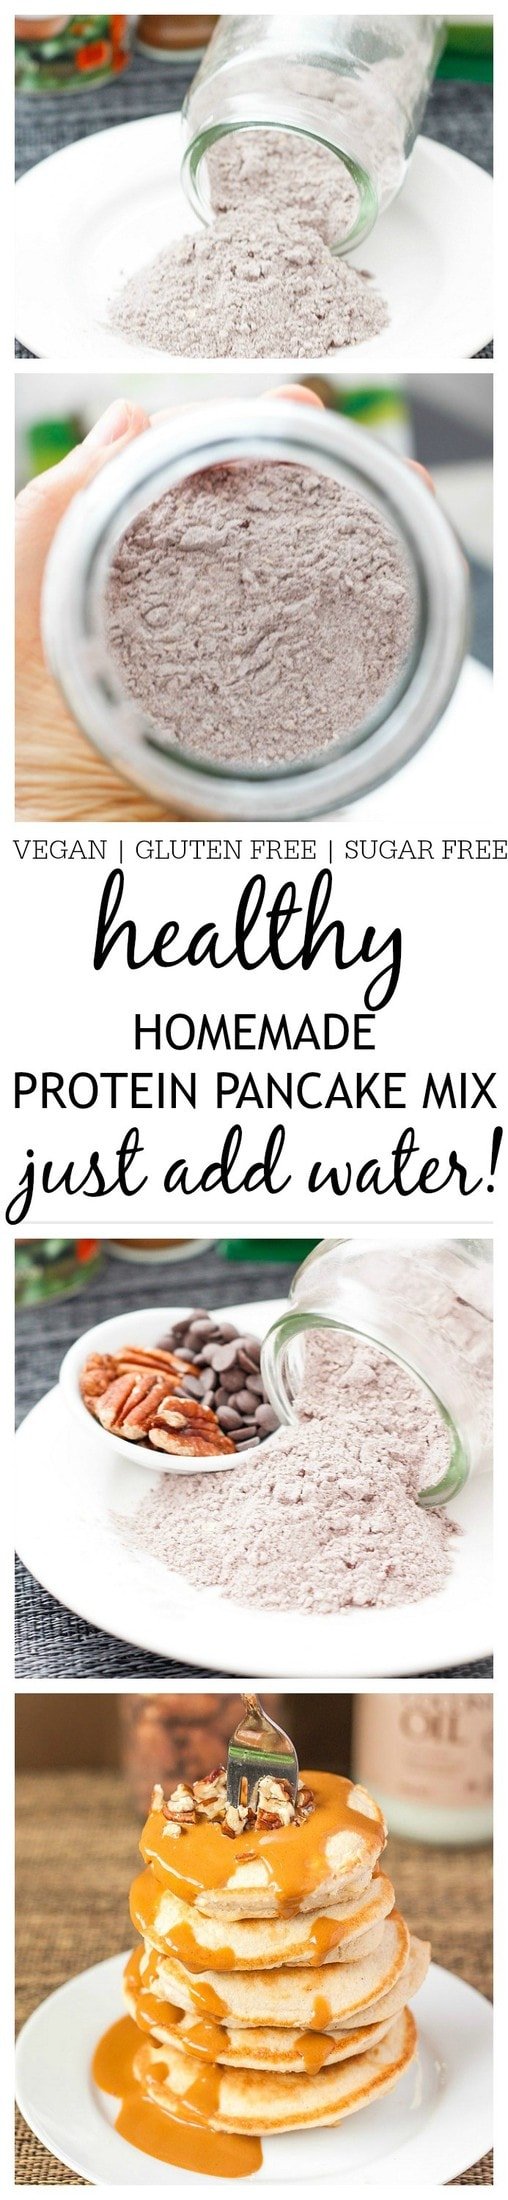 homemade protein pancake mix